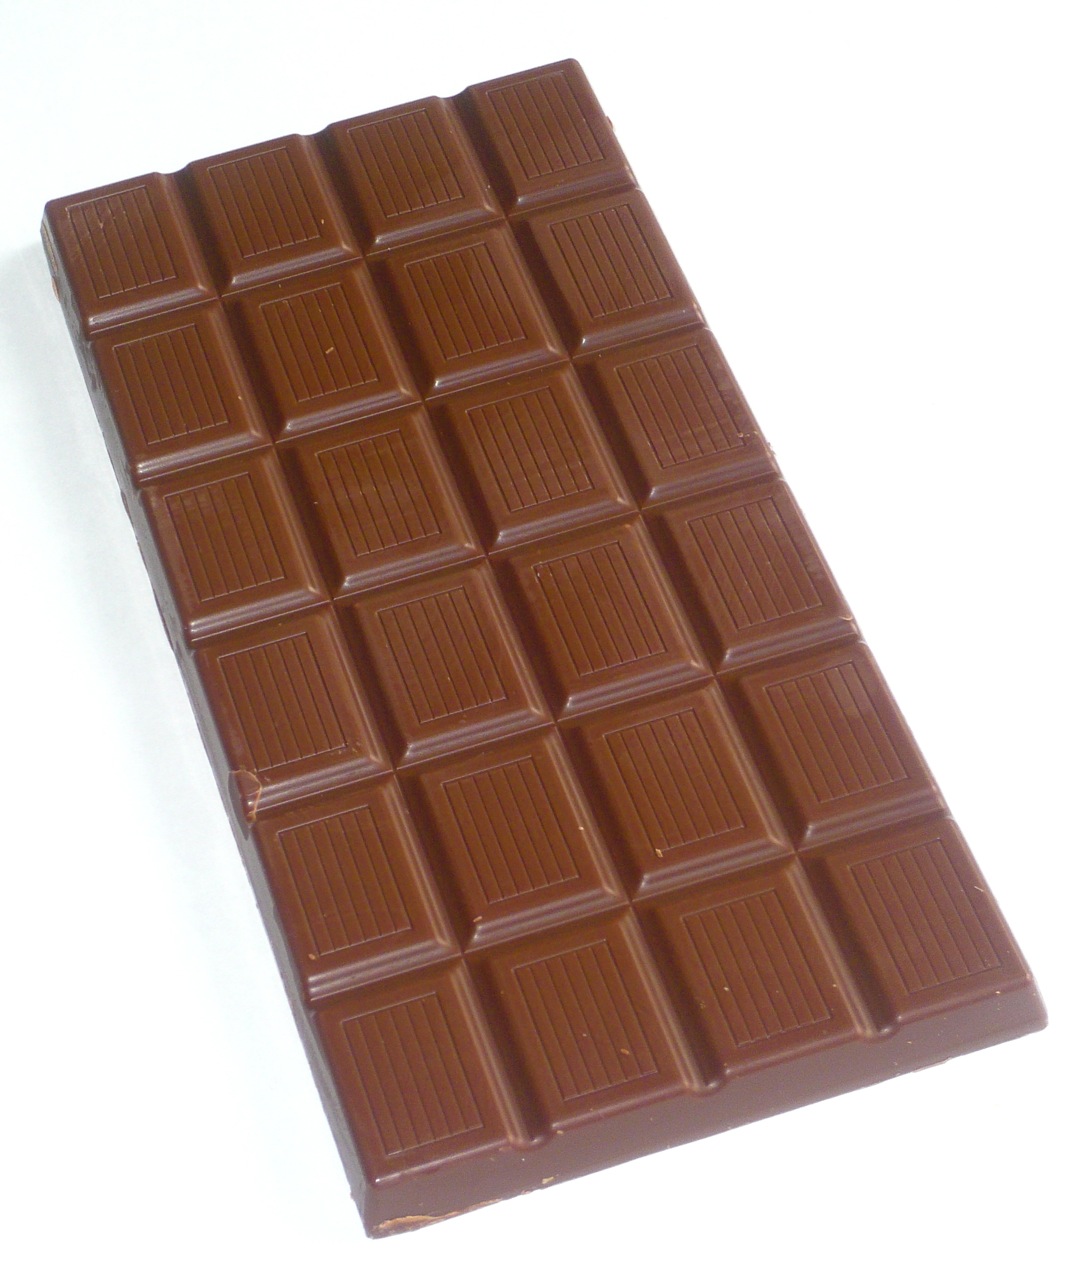 bar of chocolate.